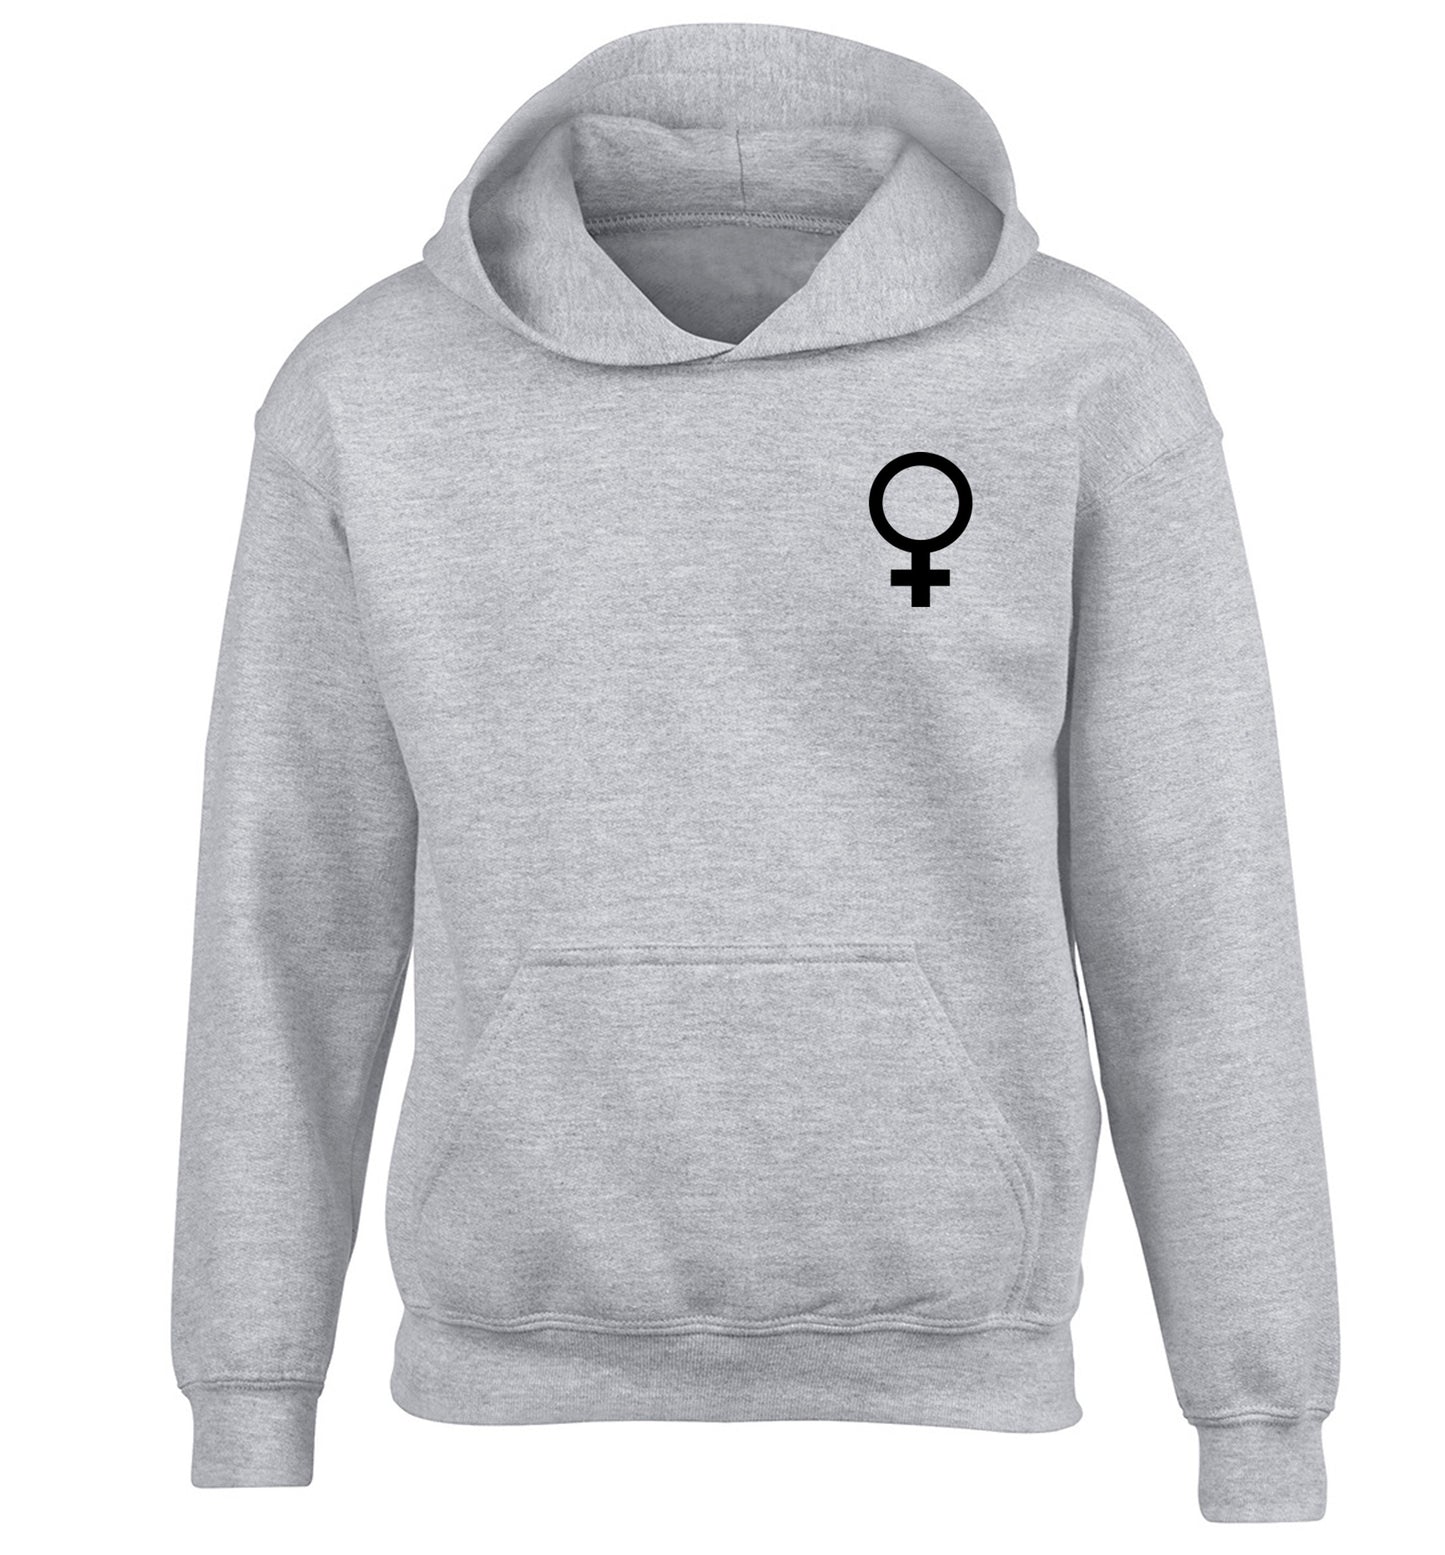 Female pocket symbol children's grey hoodie 12-14 Years